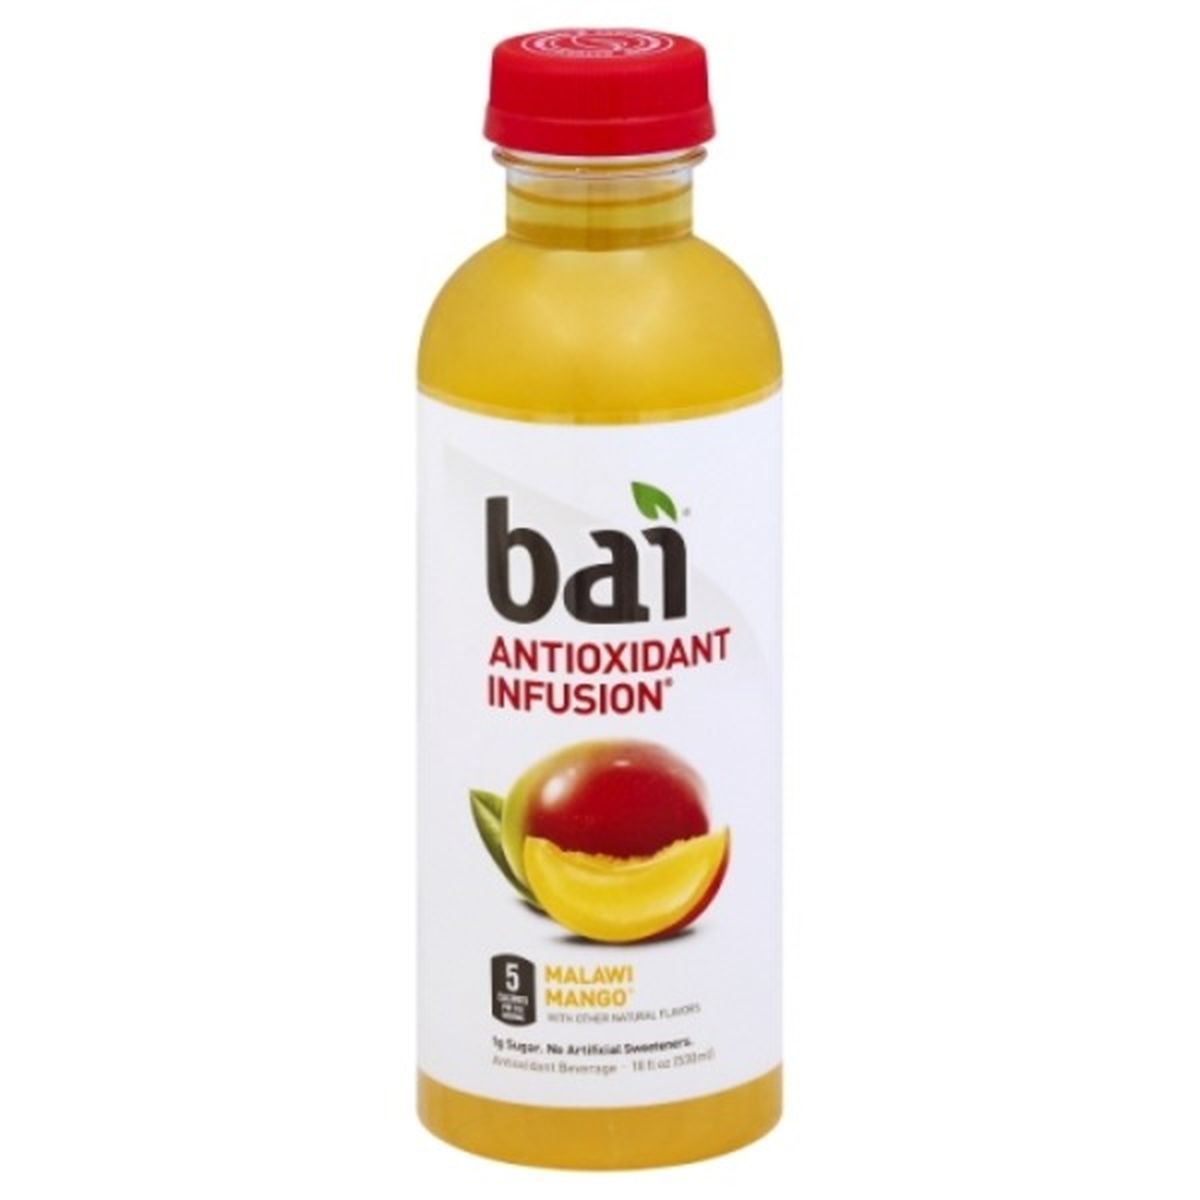 Calories in Bai Antioxidant Infusion, Malawi Mango